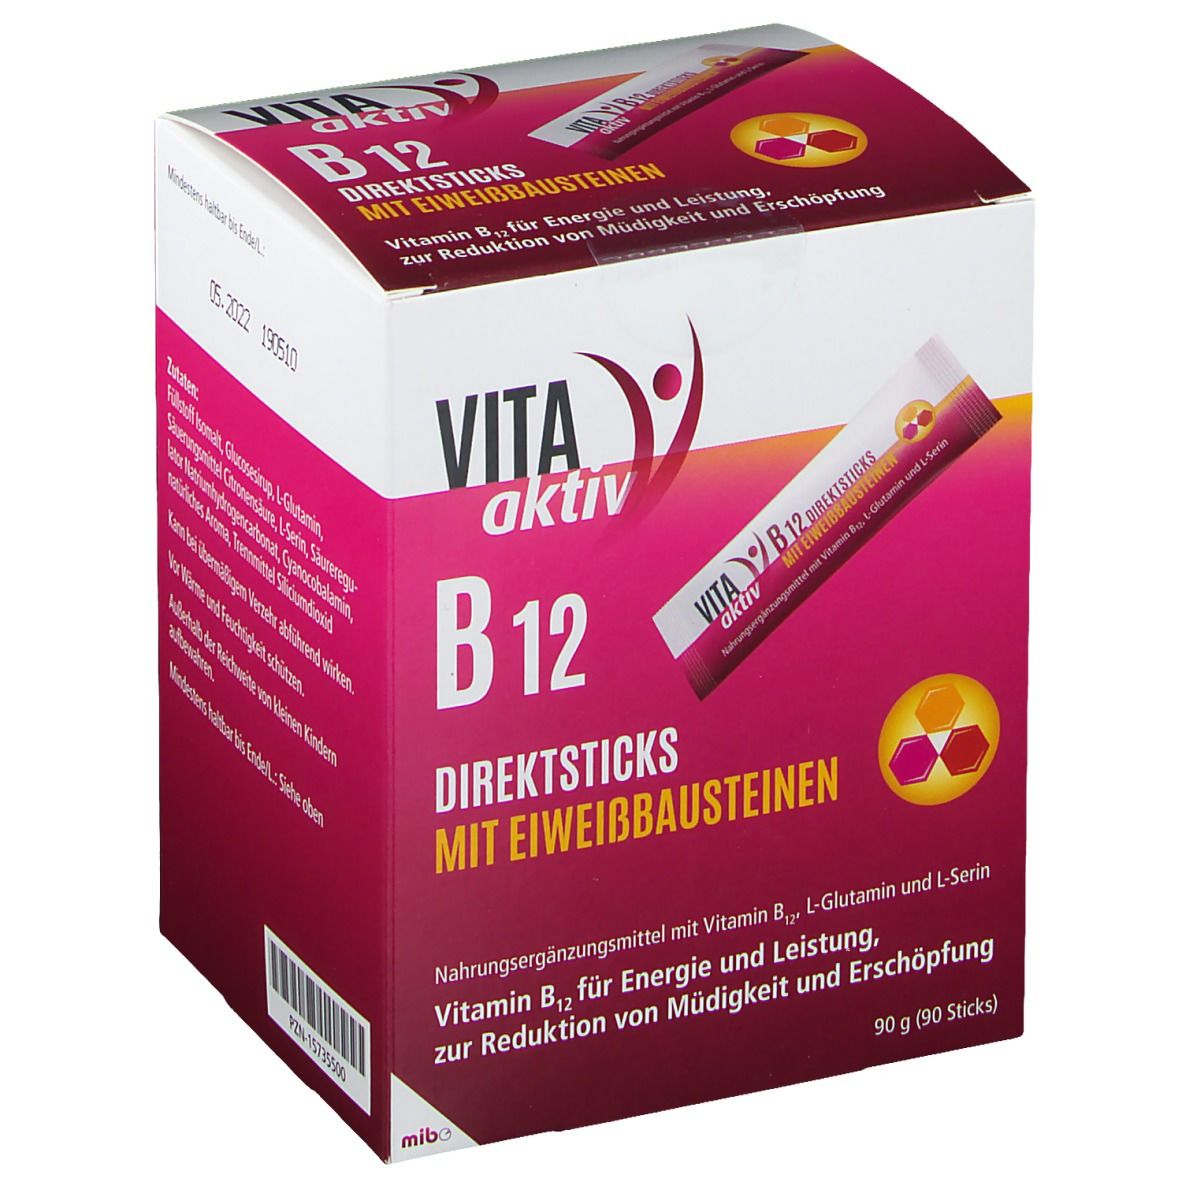 VITA aktiv B12